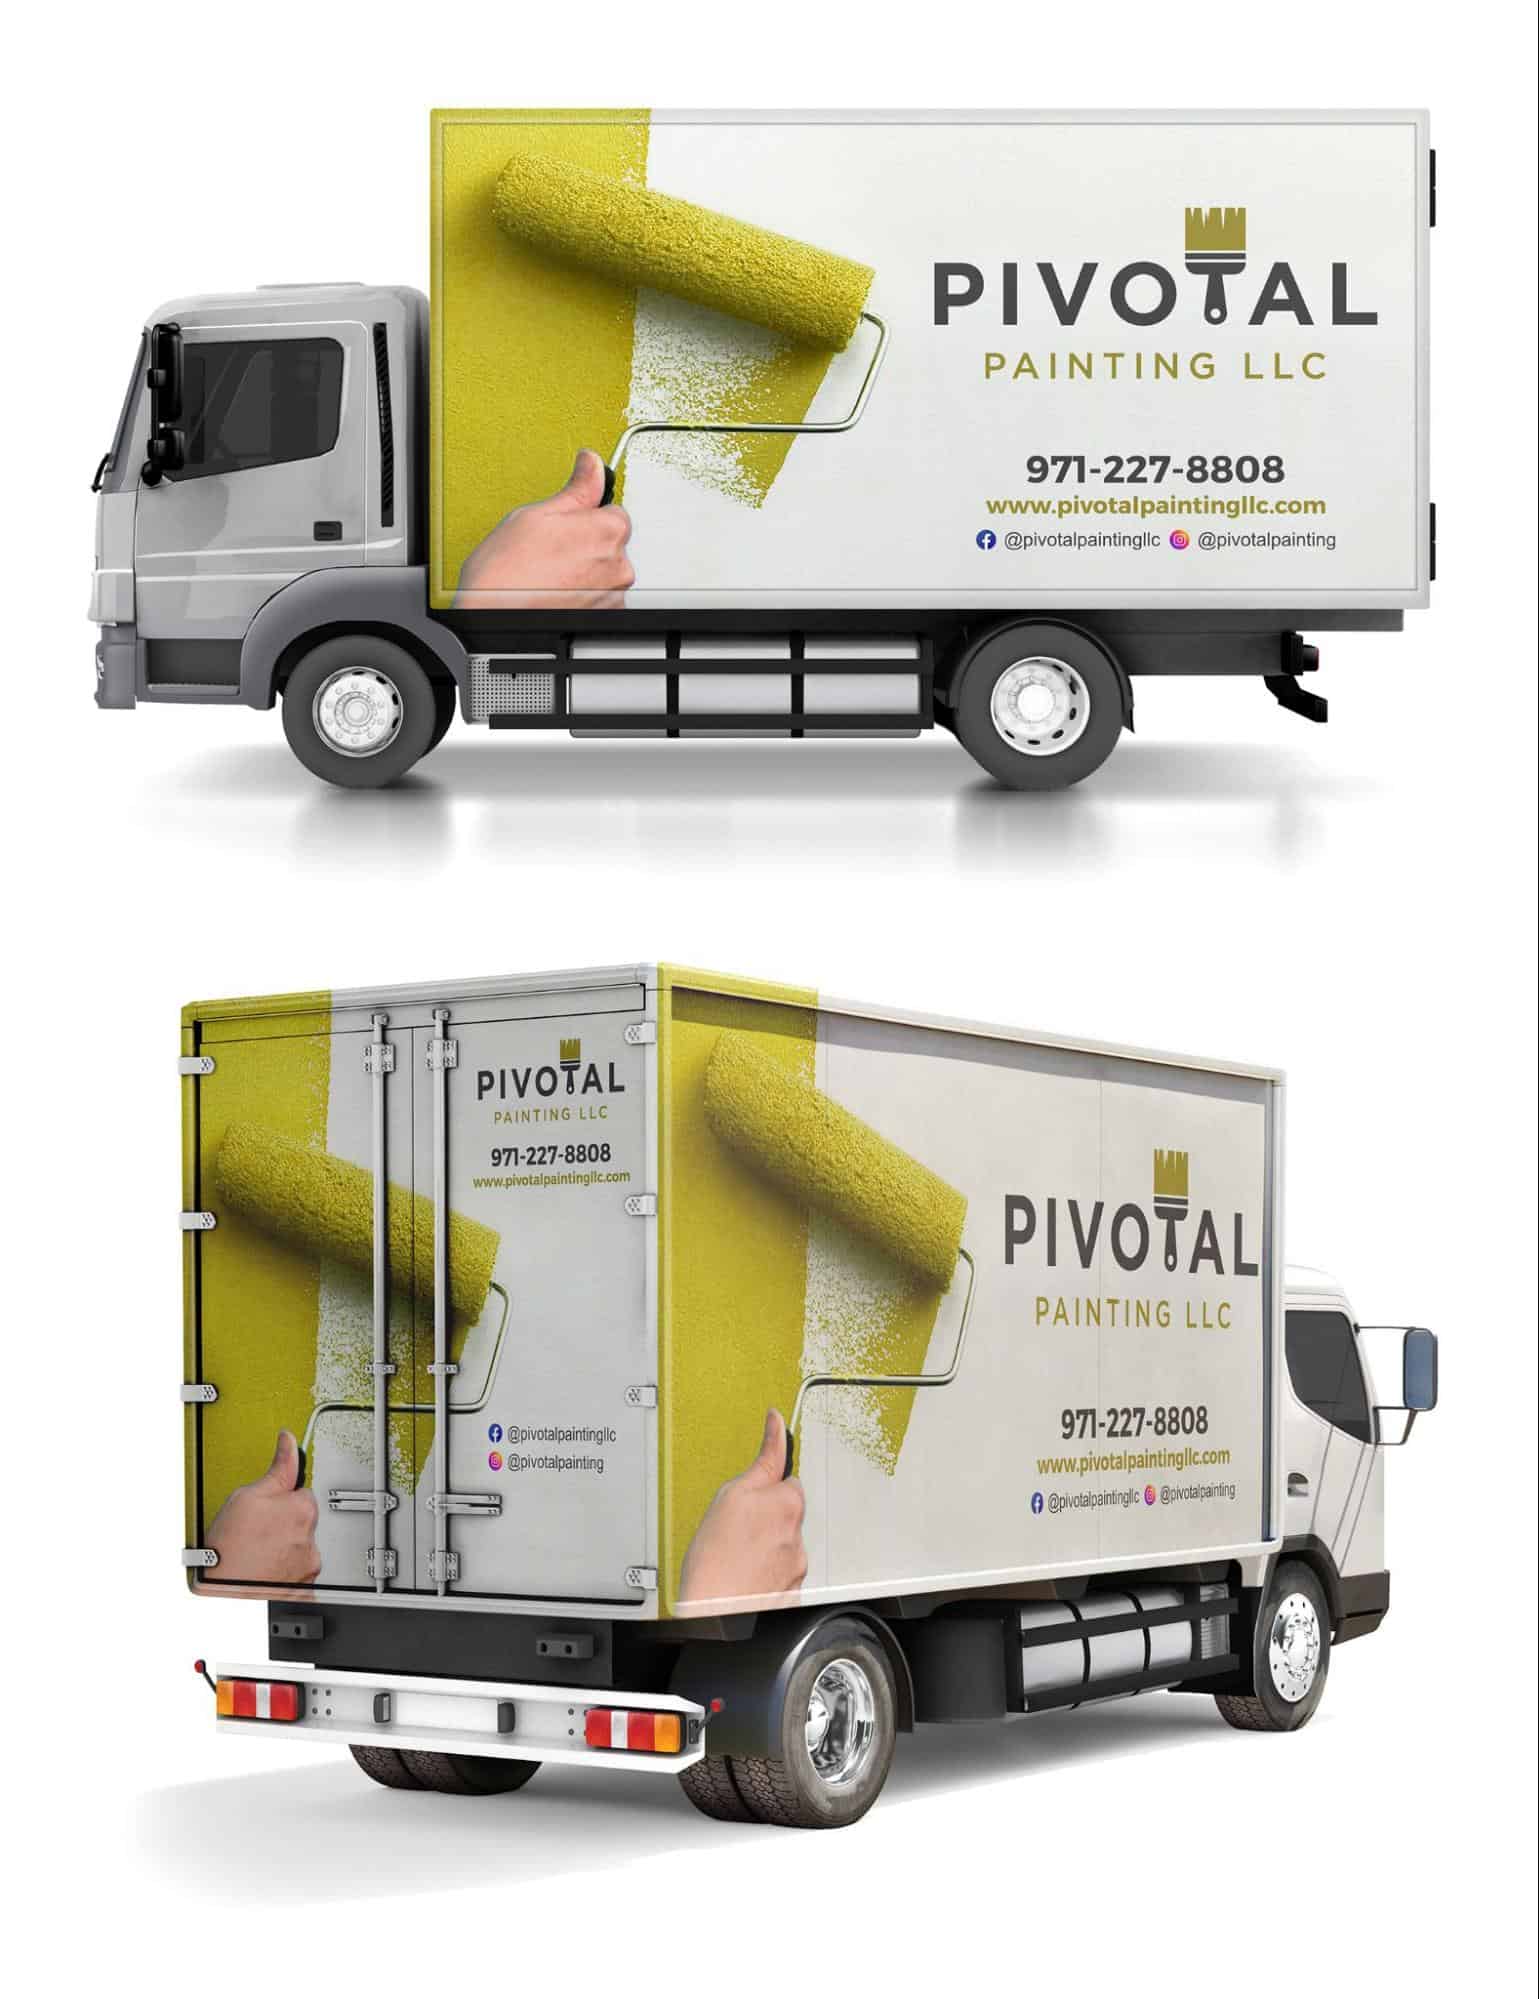 graphic designer - Pivotal's vehicle wraps